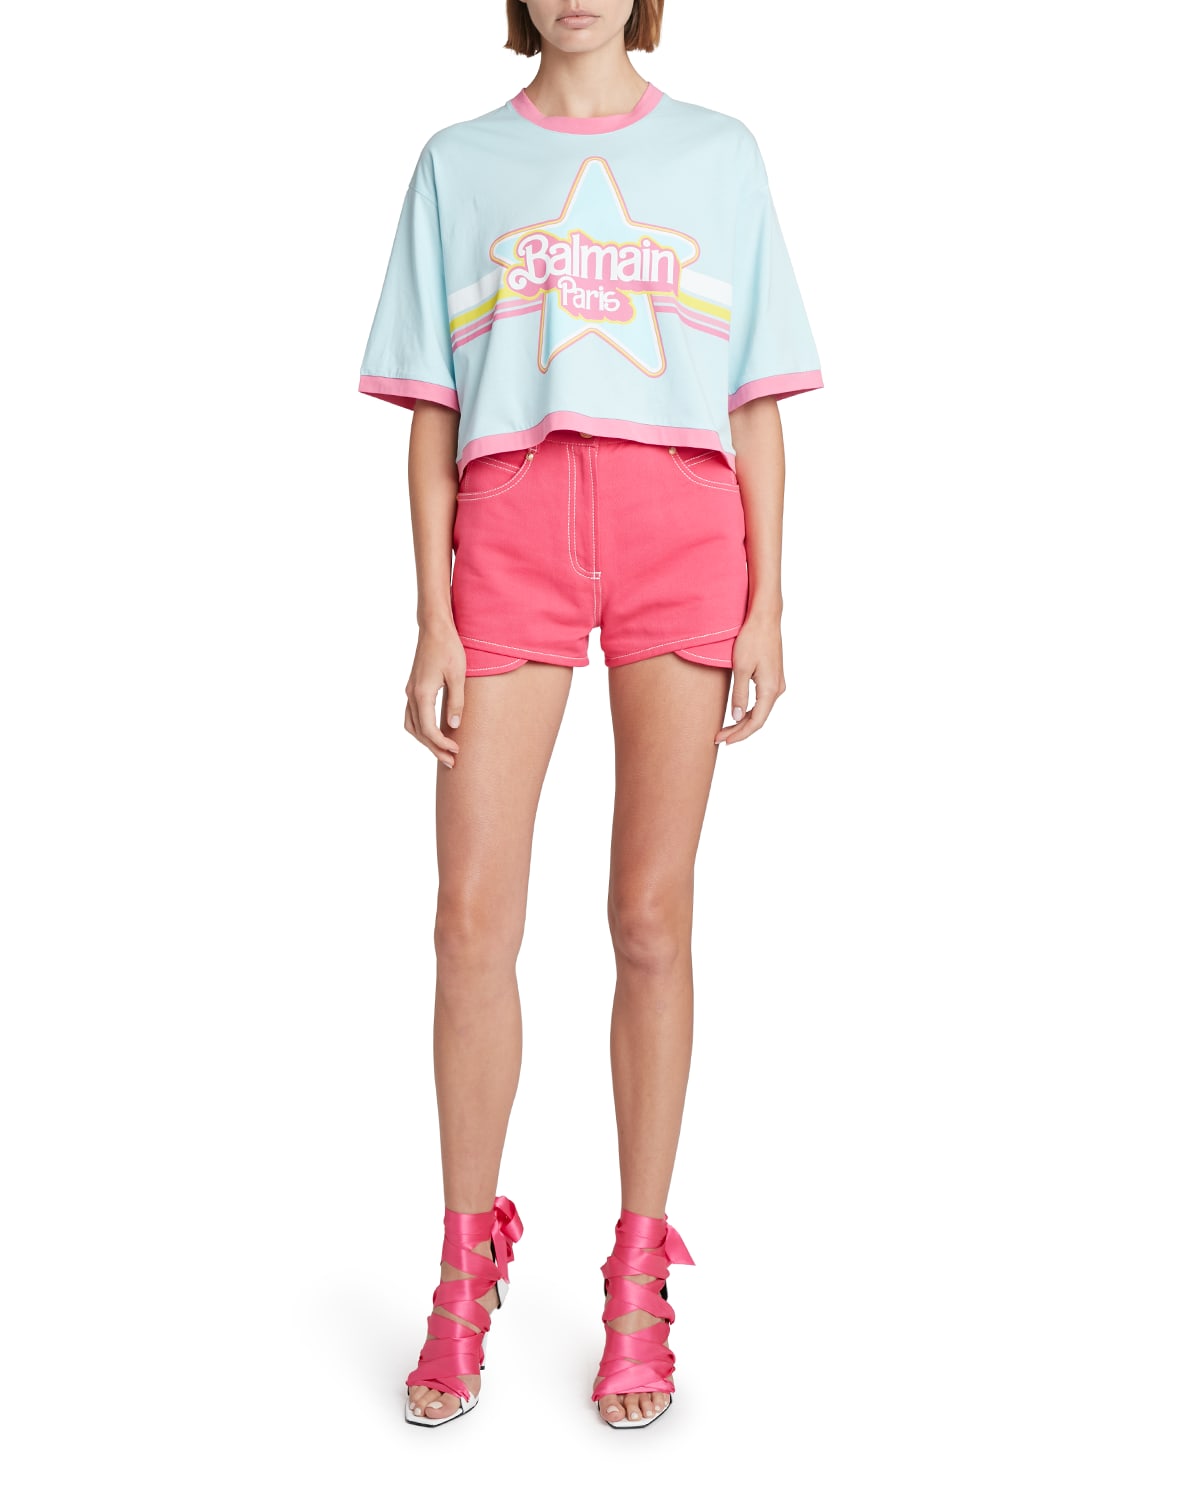 Balmain x Barbie Logo Star-Print Cropped T-Shirt